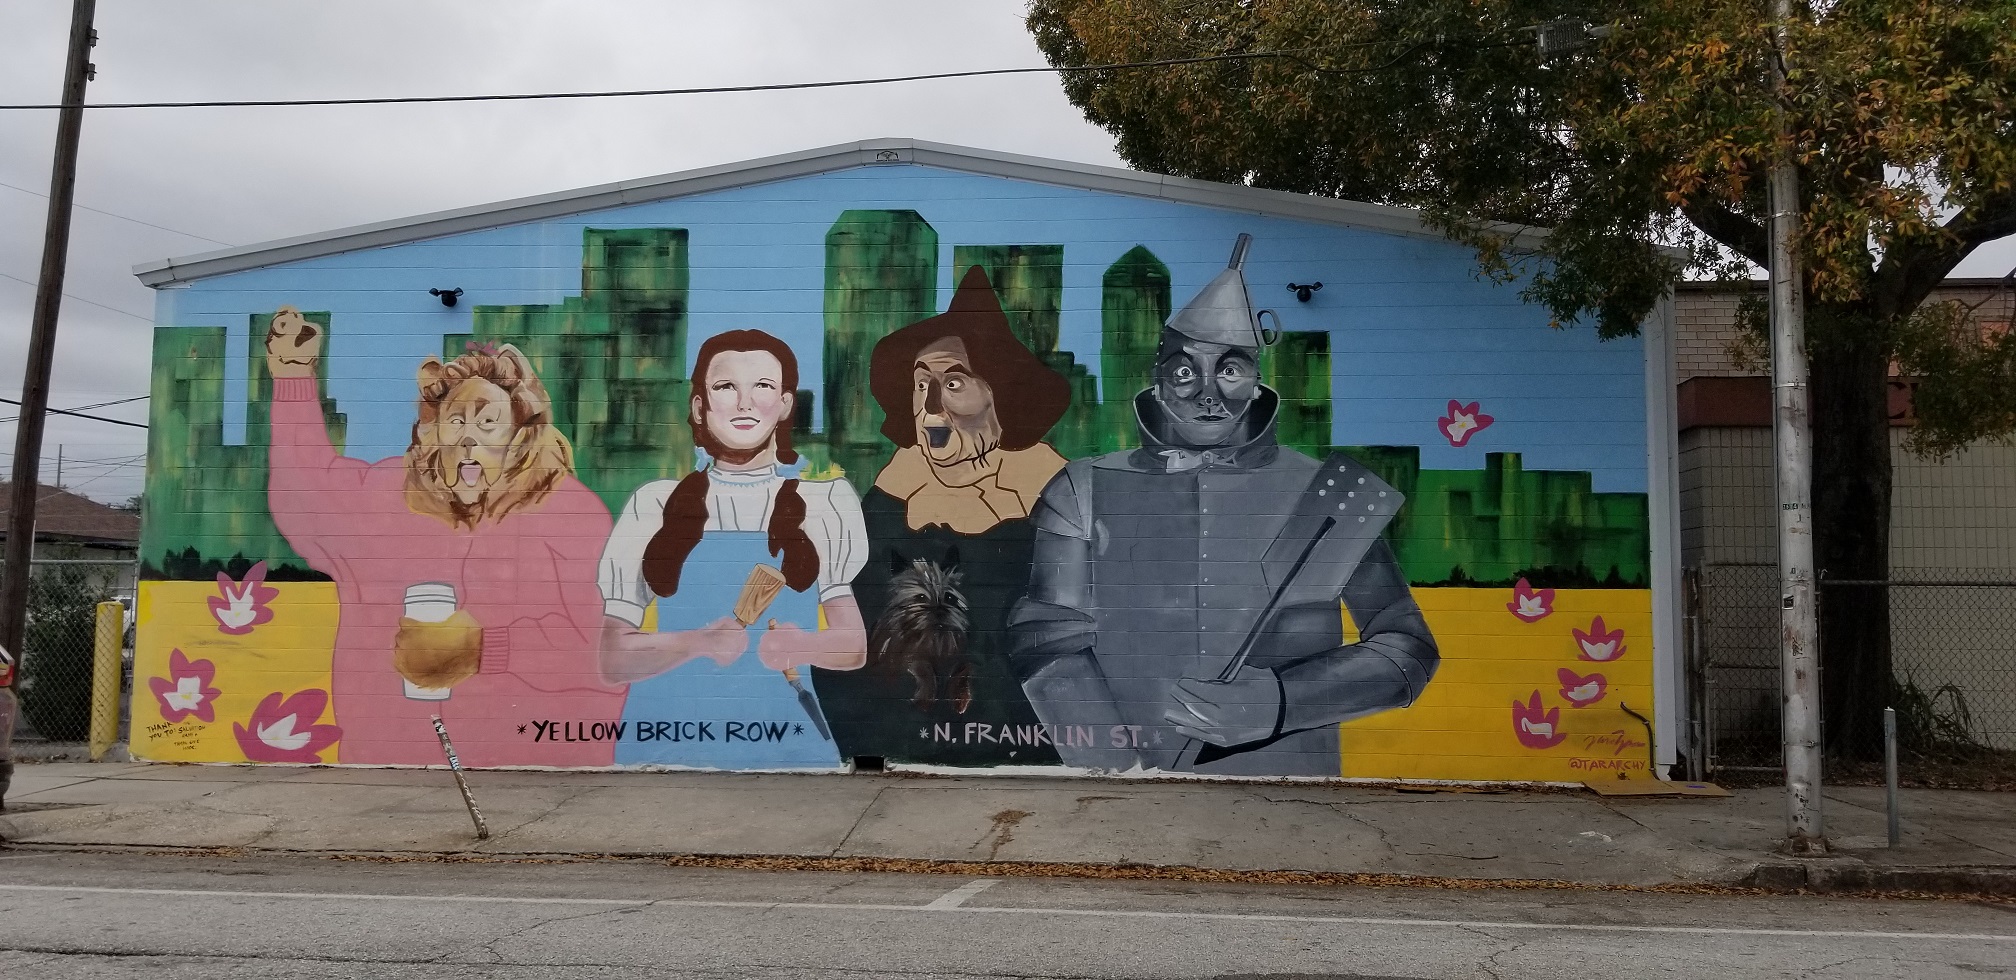 Downtown Tampa mural